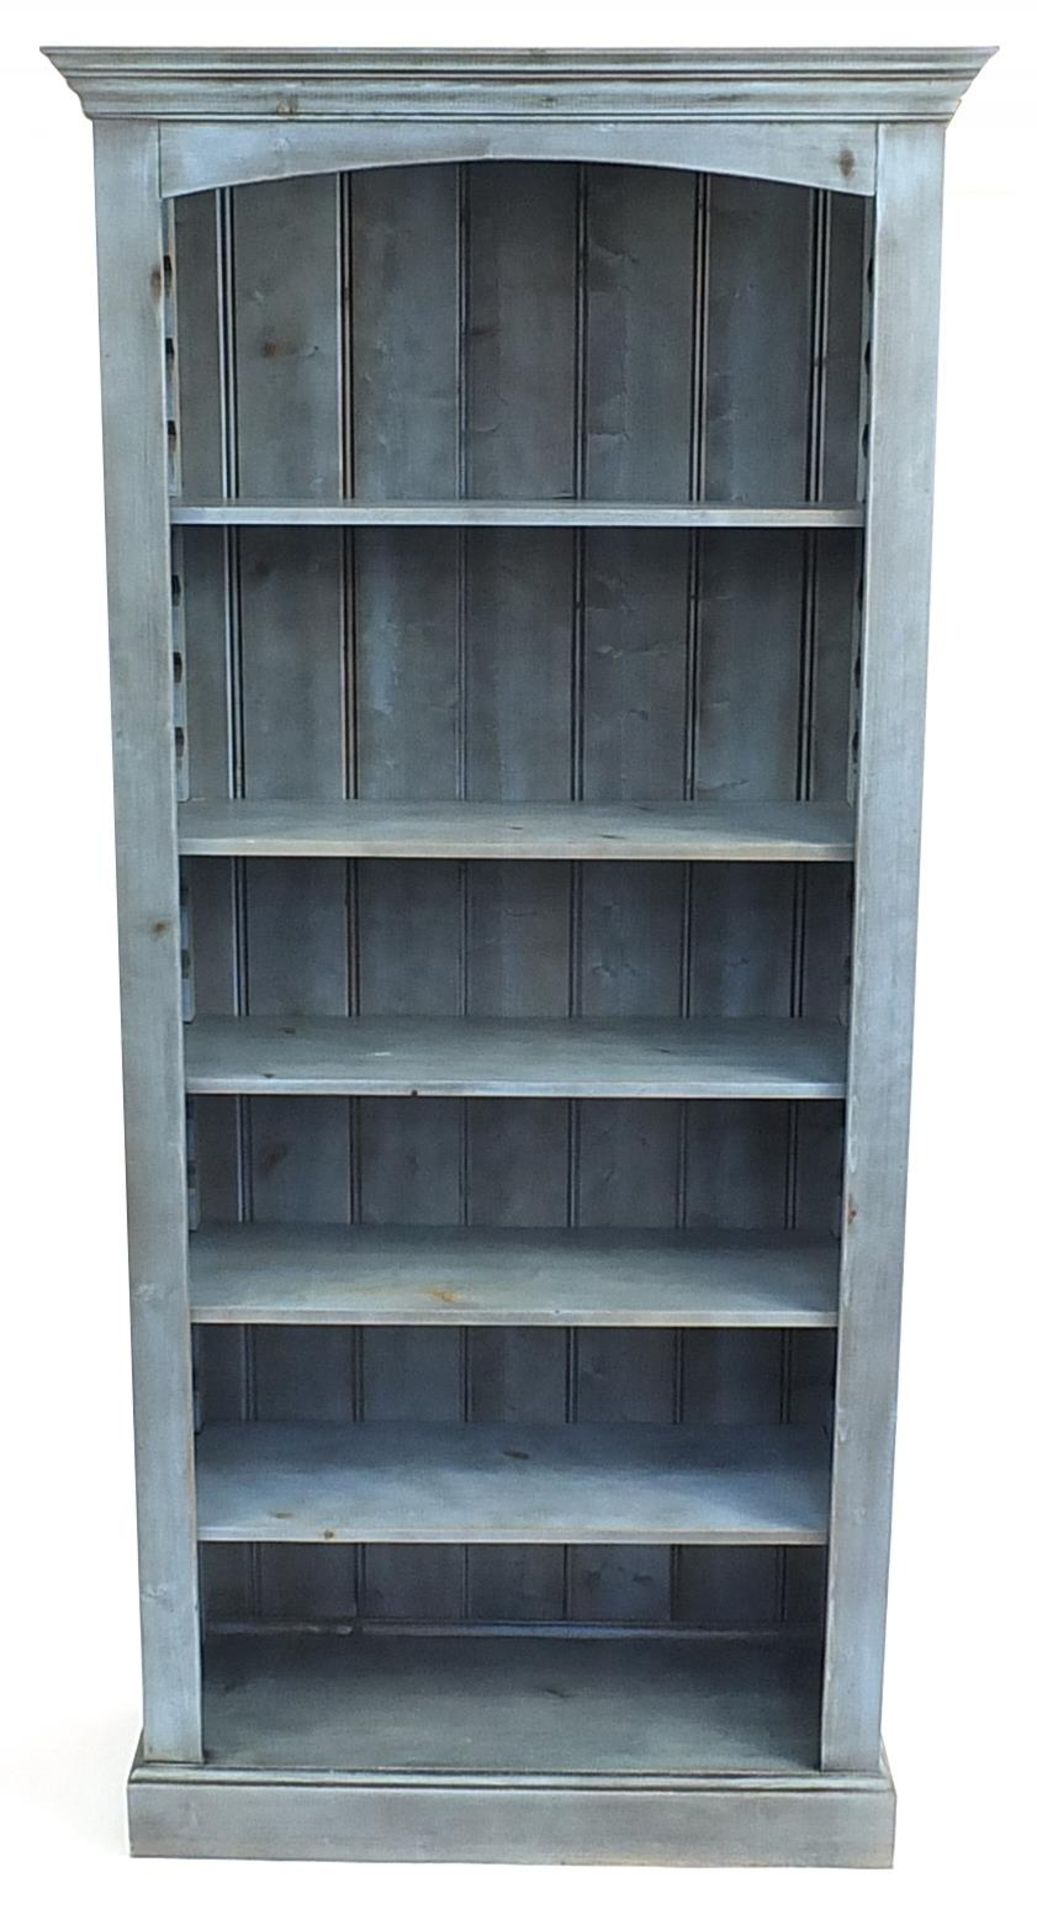 Painted pine six shelf open bookcase with adjustable shelves, 200cm H x 94cm W x 36cm D - Image 2 of 3